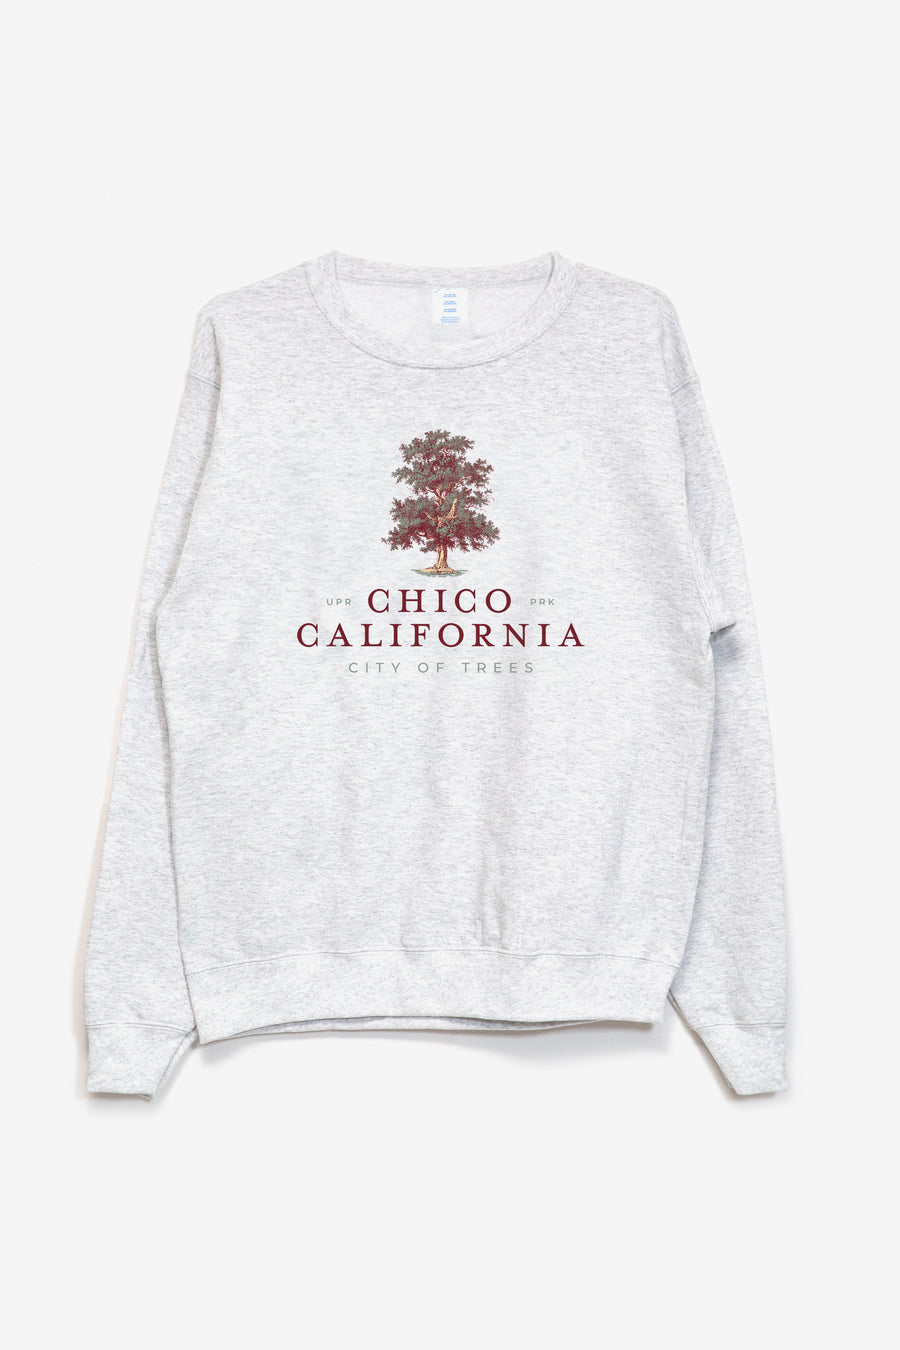 Chico City of Trees Crewneck Sweatshirt - California